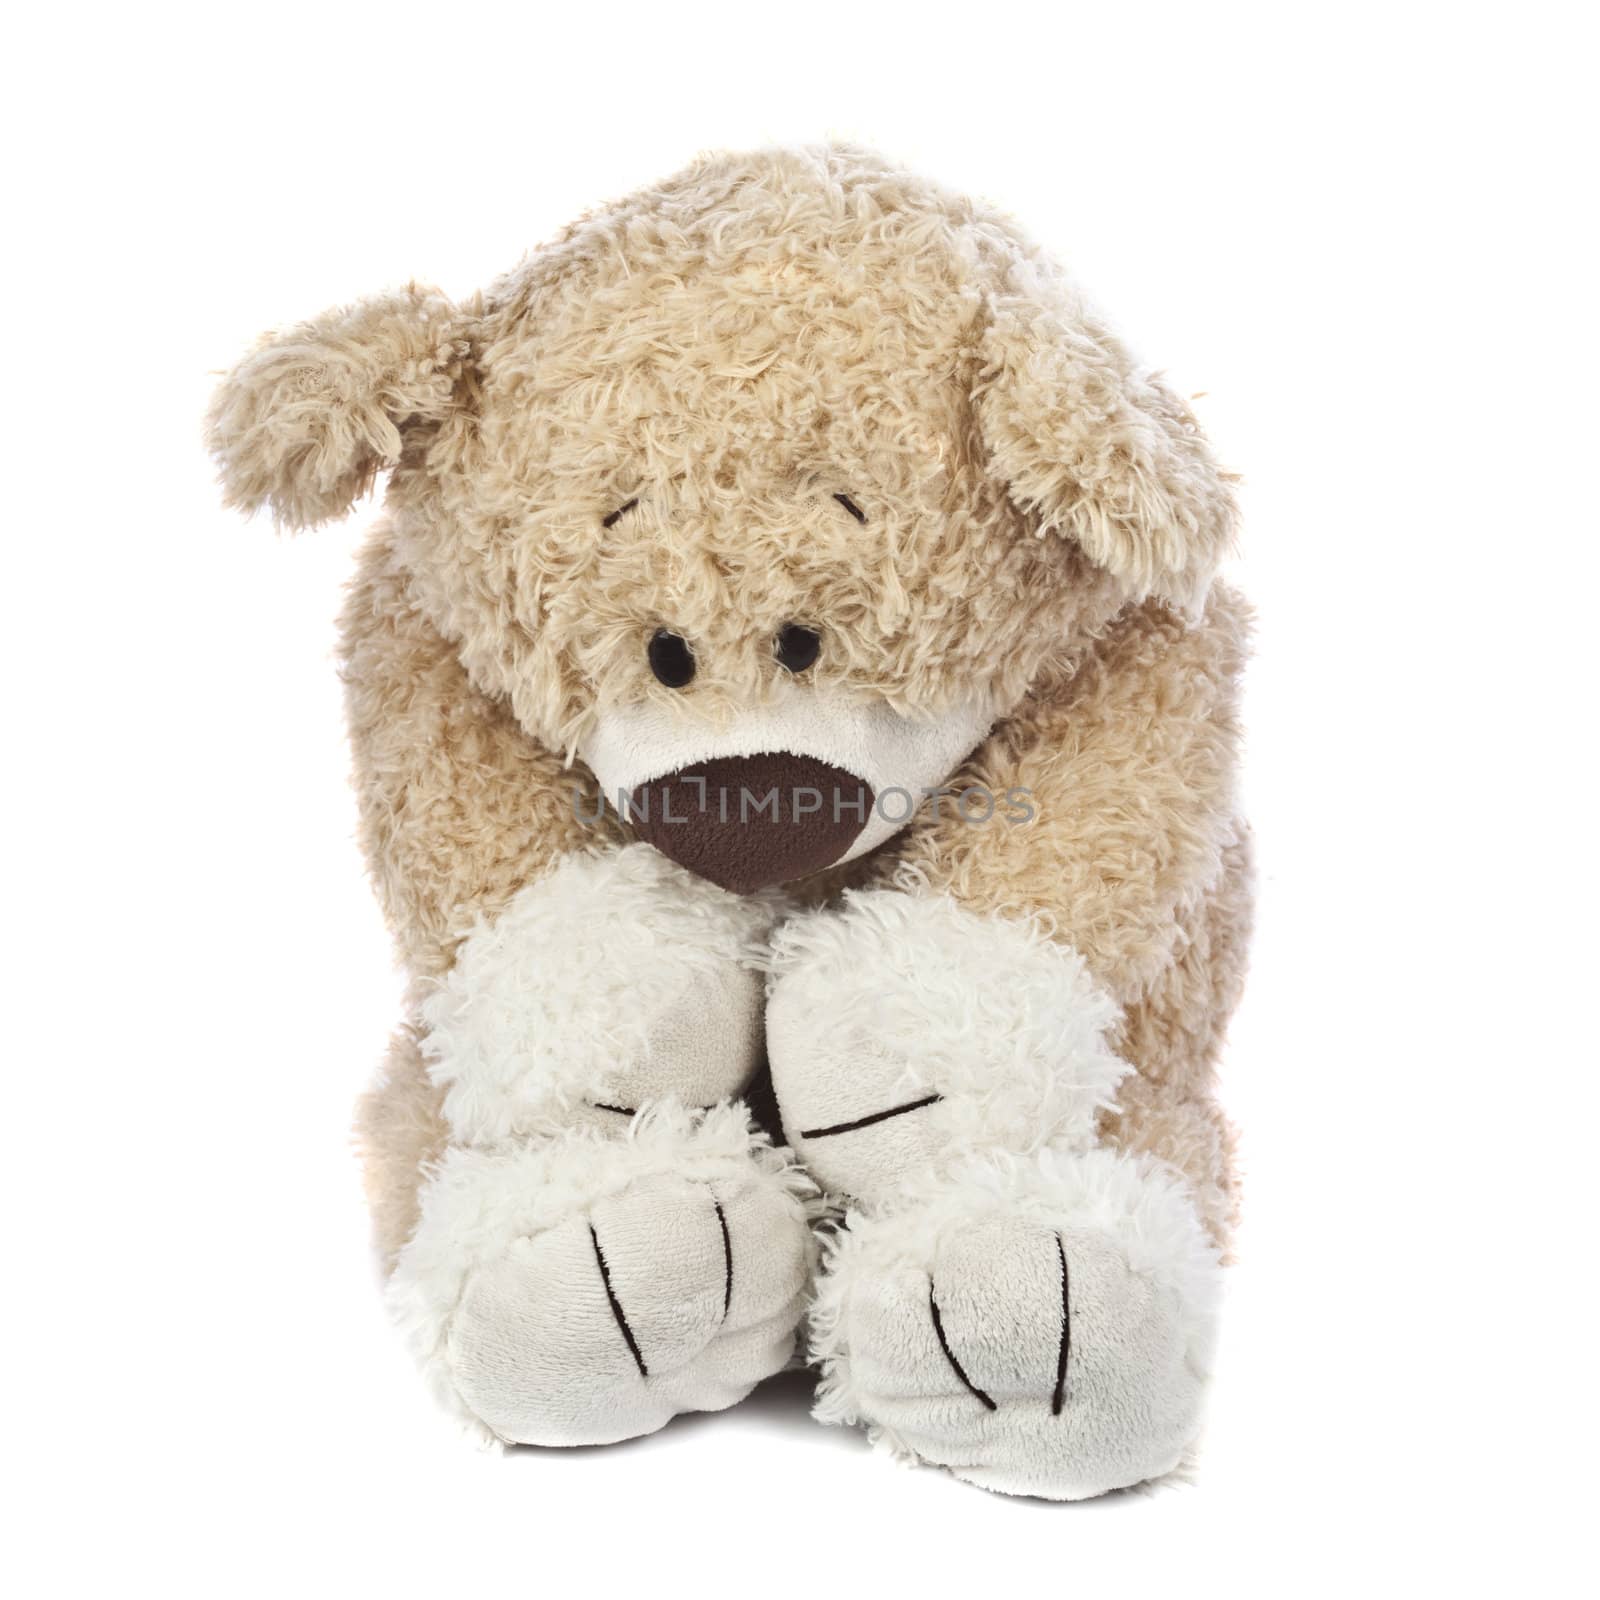 Sad and Lonely Teddy Bear by Daniel_Wiedemann